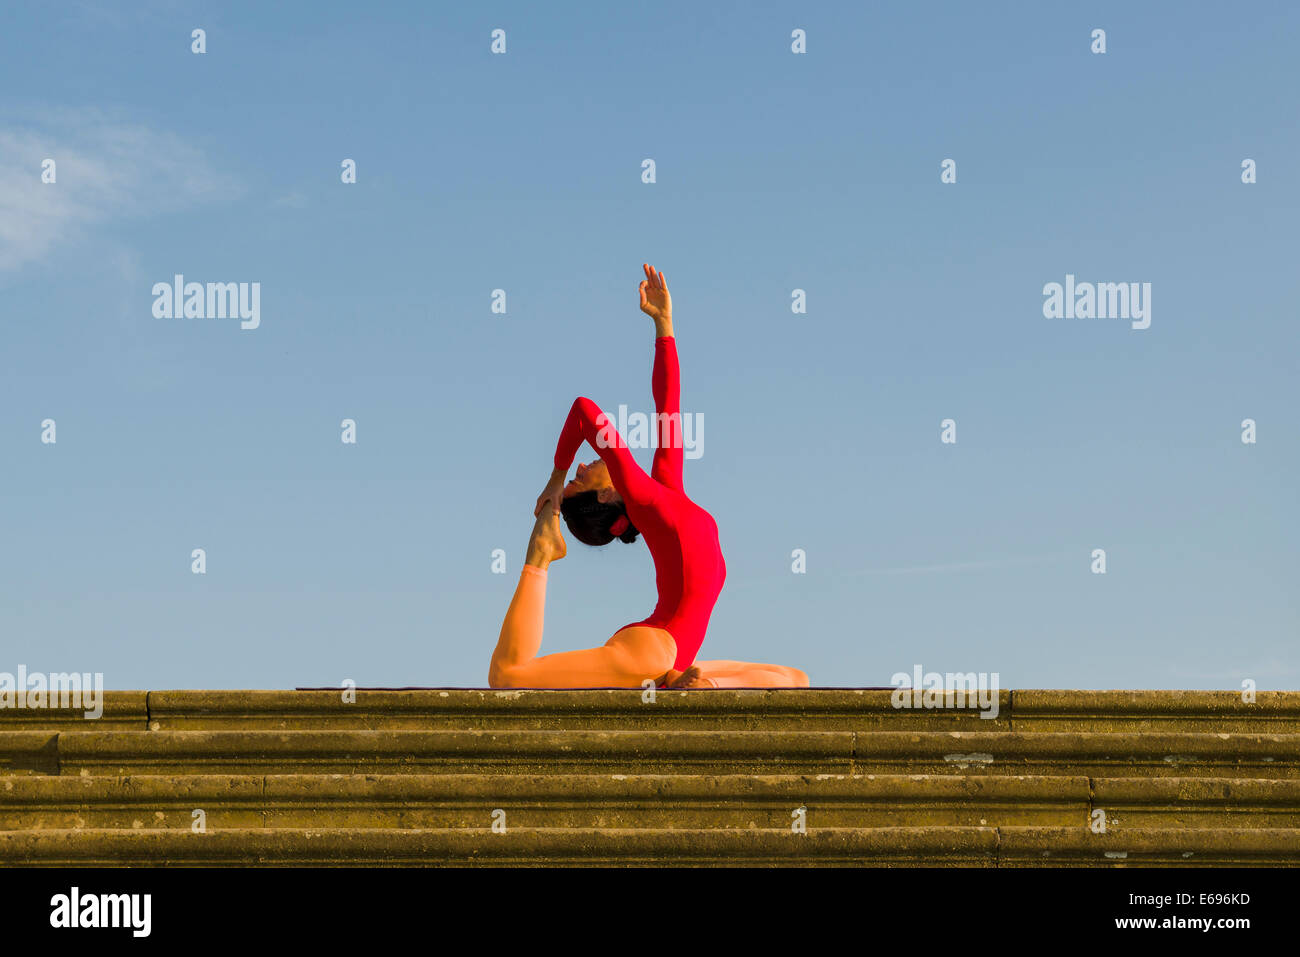 Junge Frau Hatha Yoga im Freien praktizieren, zeigt die Pose Kapotasana, Pigeon pose Stockfoto